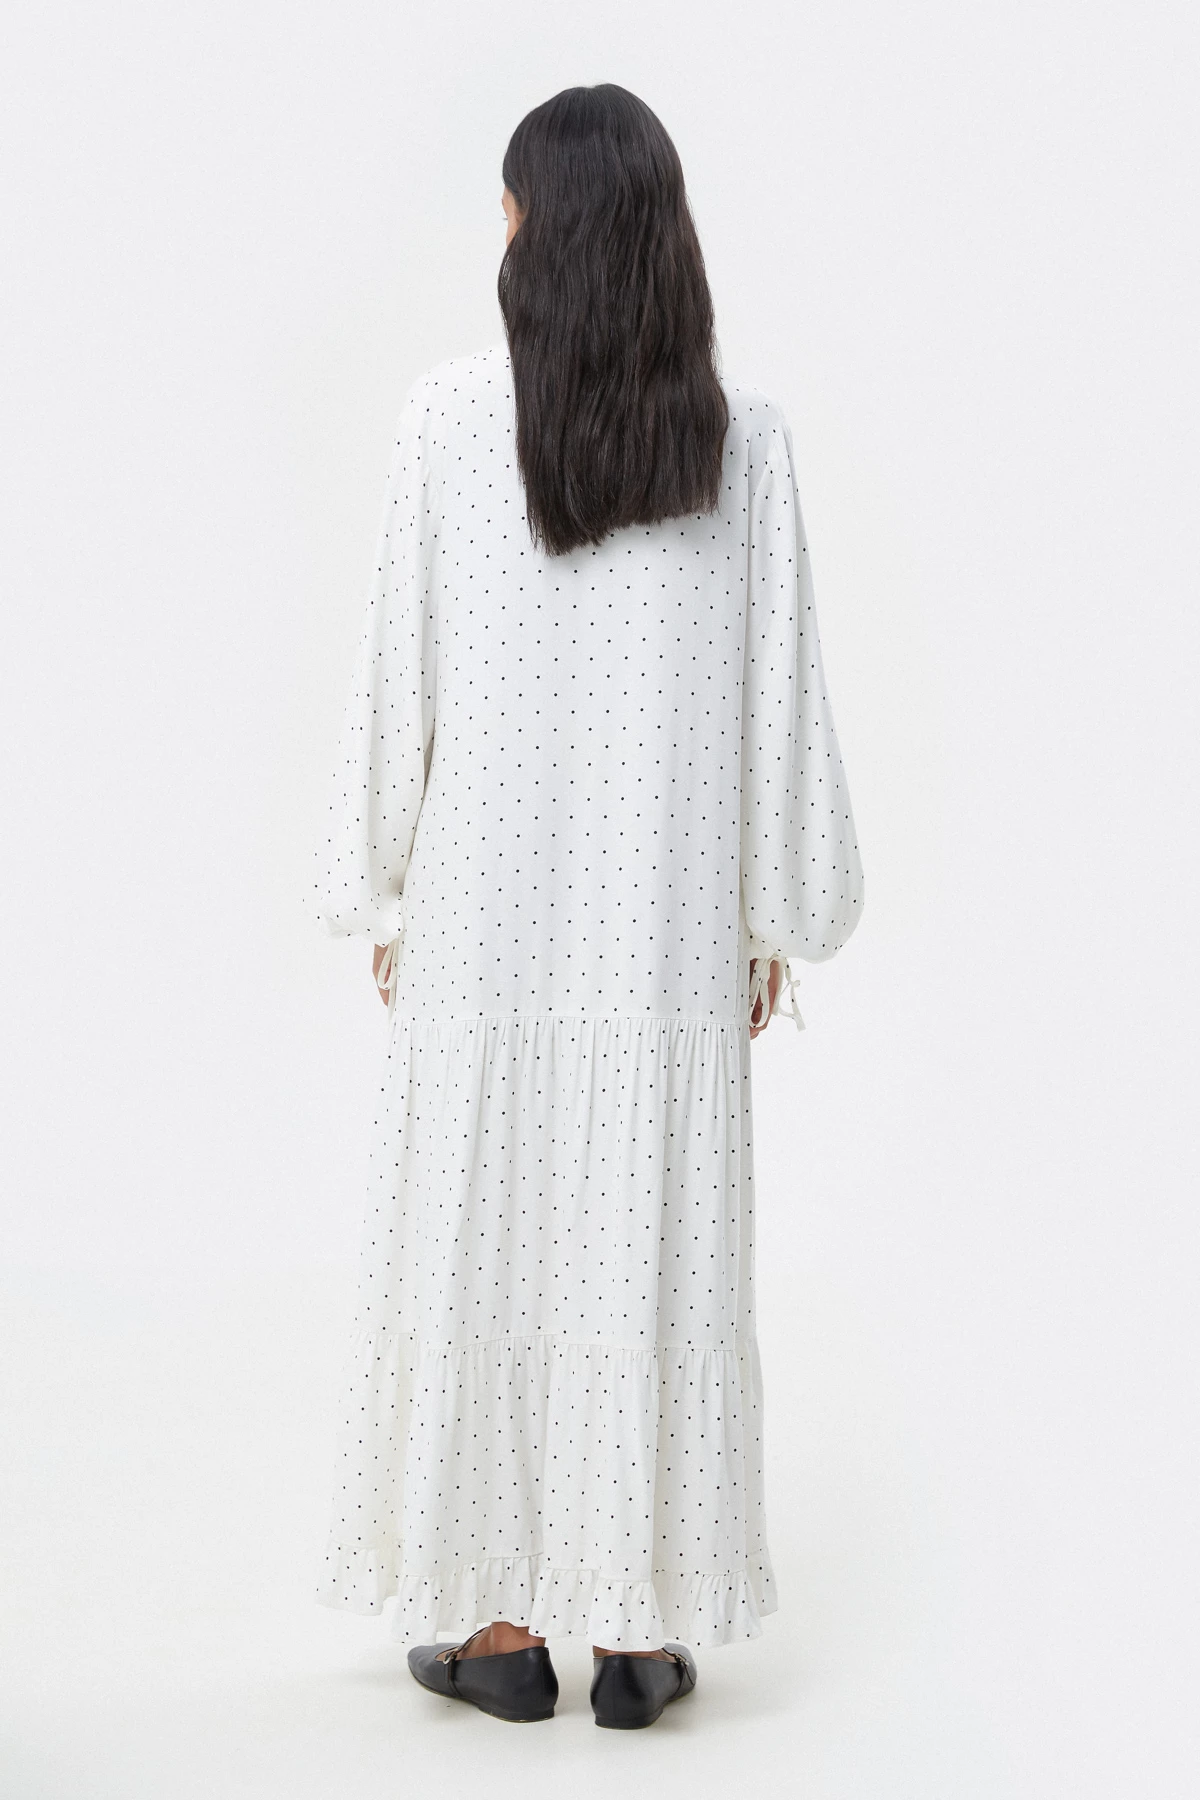 Milky viscose elongated midi dress with polka dot print, photo 4